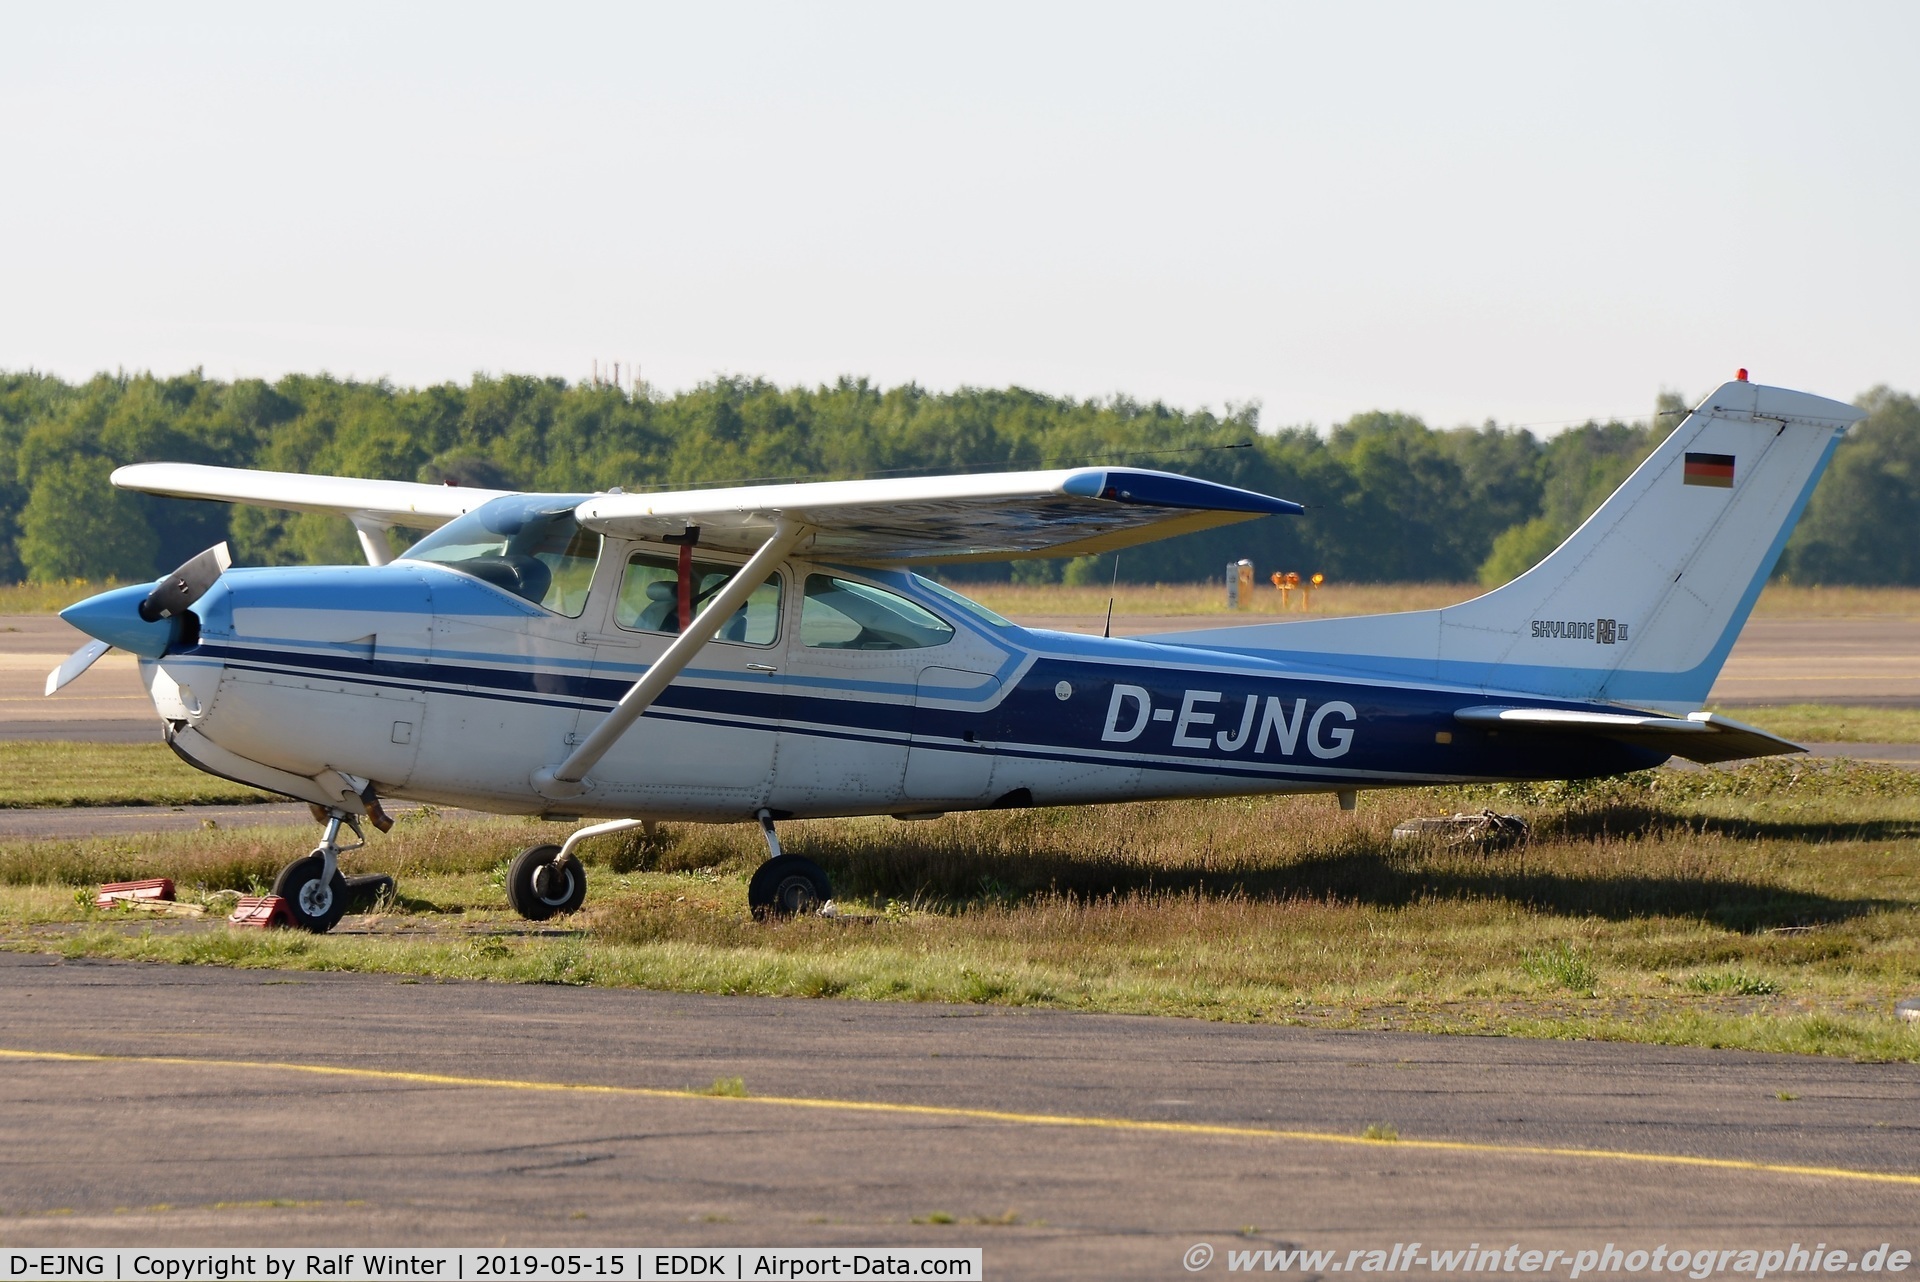 D-EJNG, 1988 Cessna R182RG II Skylane RG C/N R18200337, Cessna R182 Skylane RG - Luftsportverein Rietberg - R18200337 - D-EJNG - 15.05.2019 - CGN